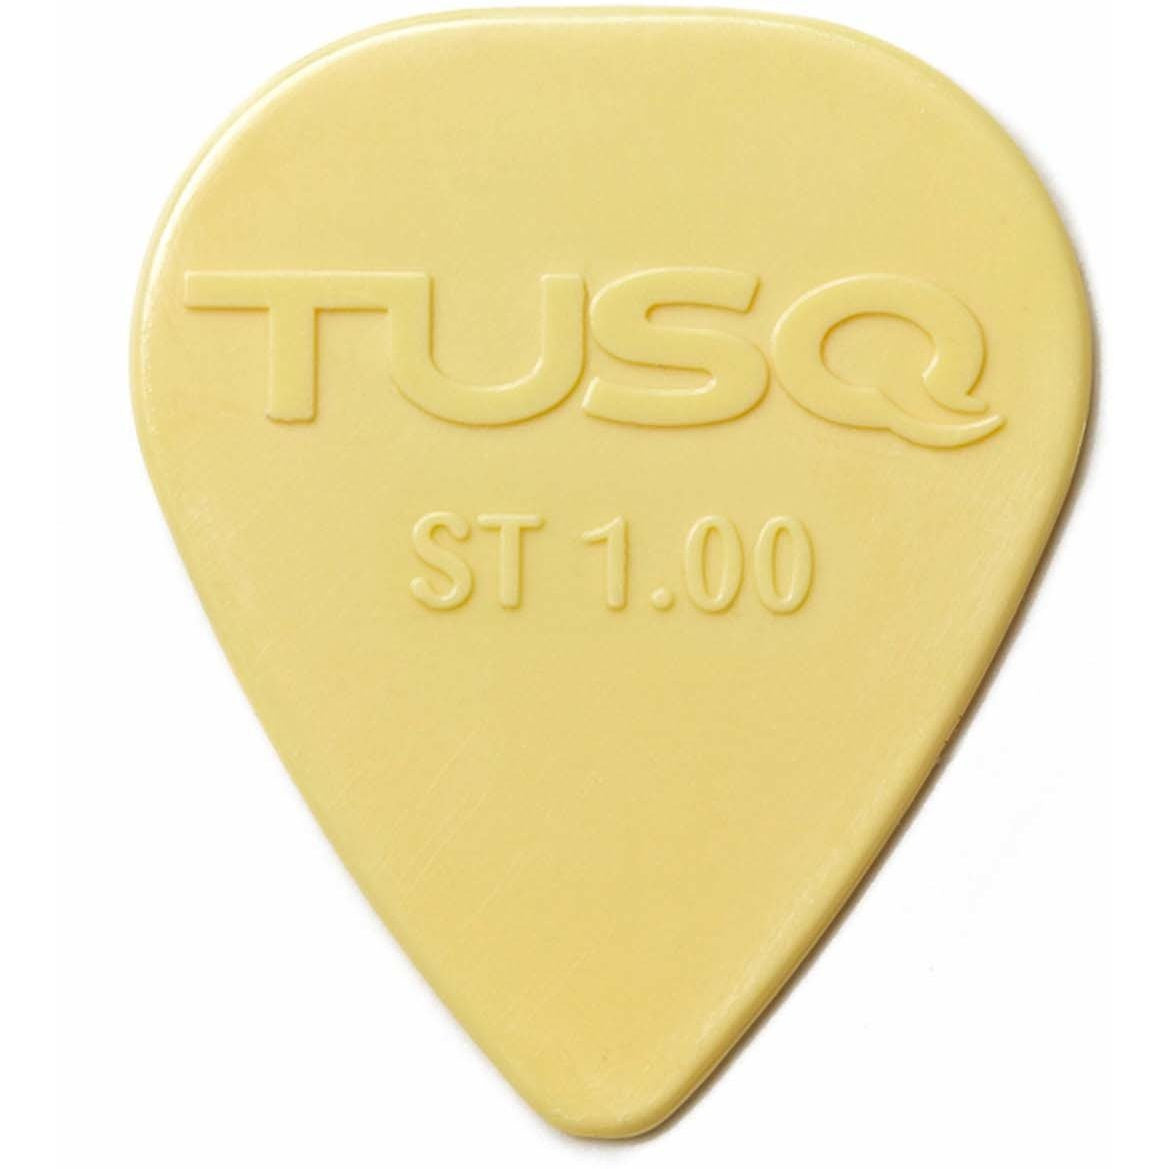 Graph Tech TUSQ Warm Tone Standard Guitar Picks, Vintage Cream, PQP-0100-V6, 6-Pack, 100mm